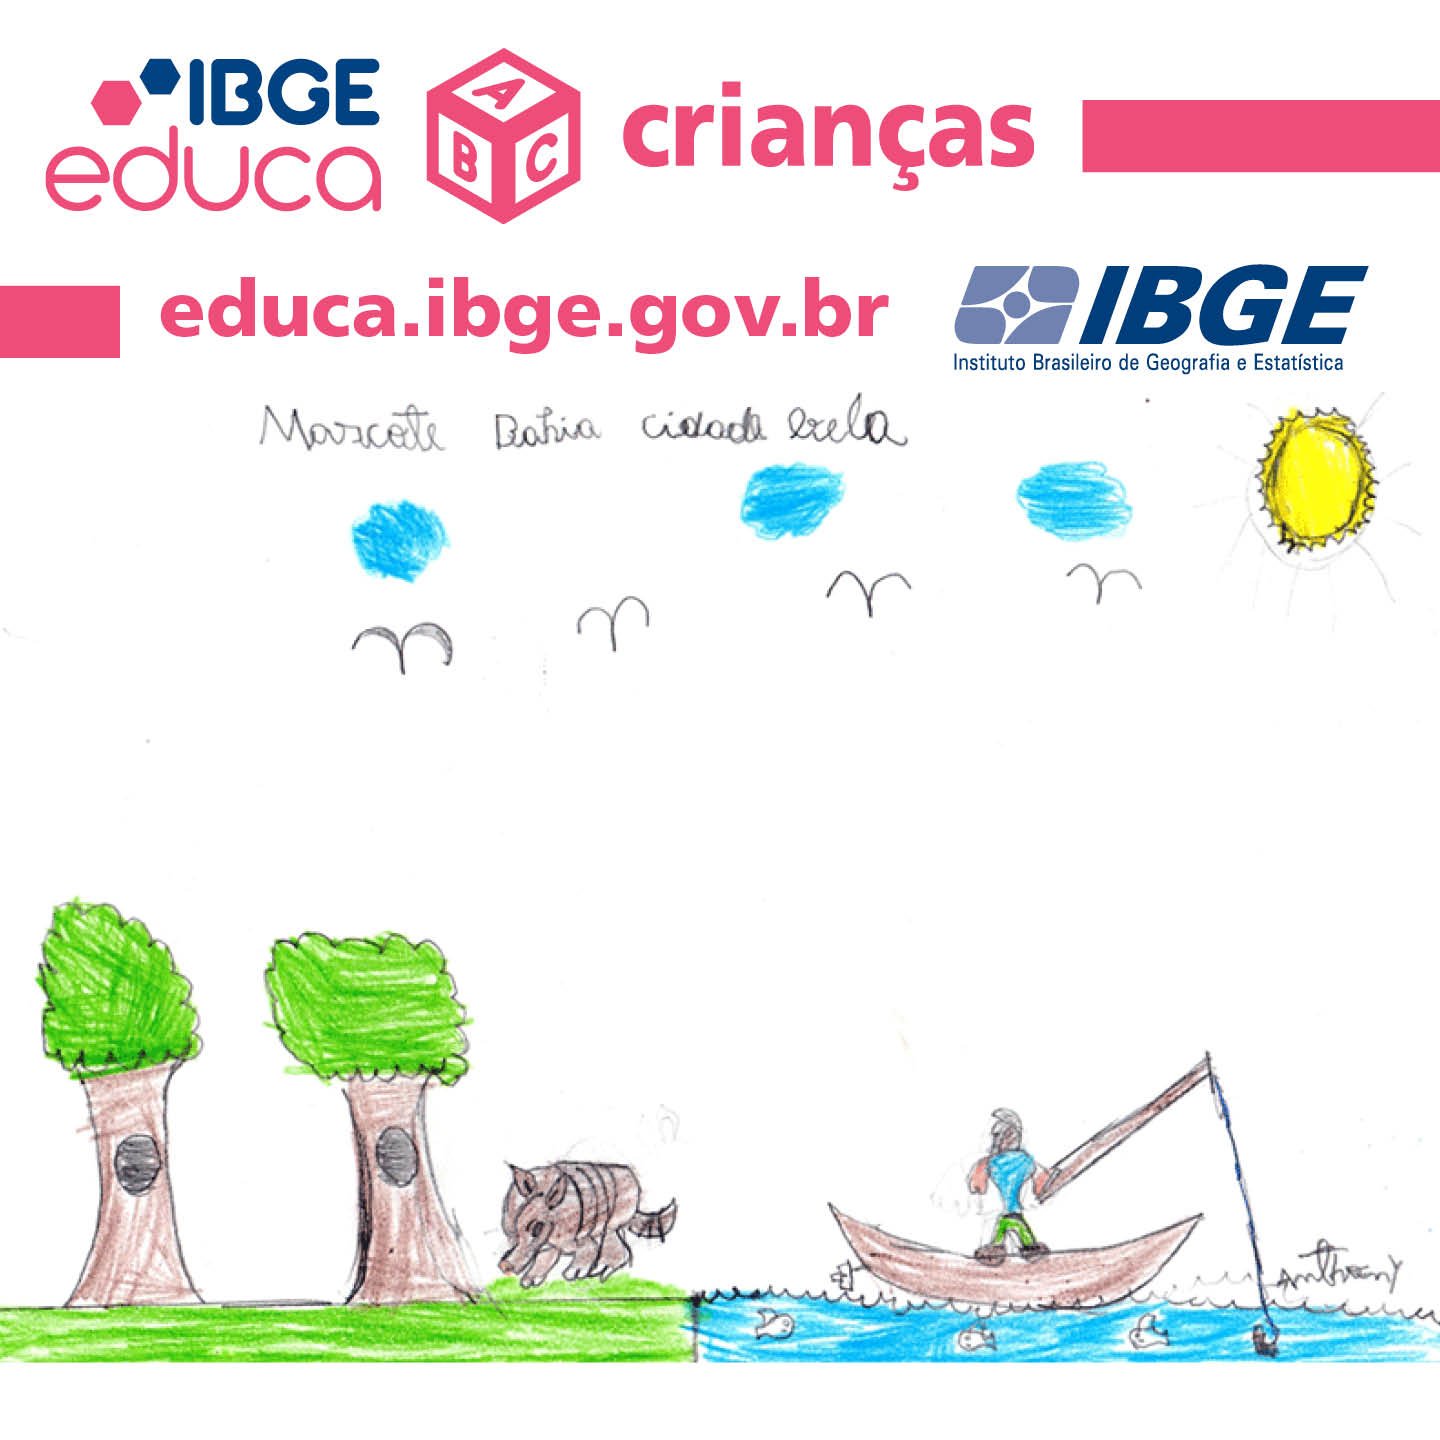 IBGE - Educa, Crianças